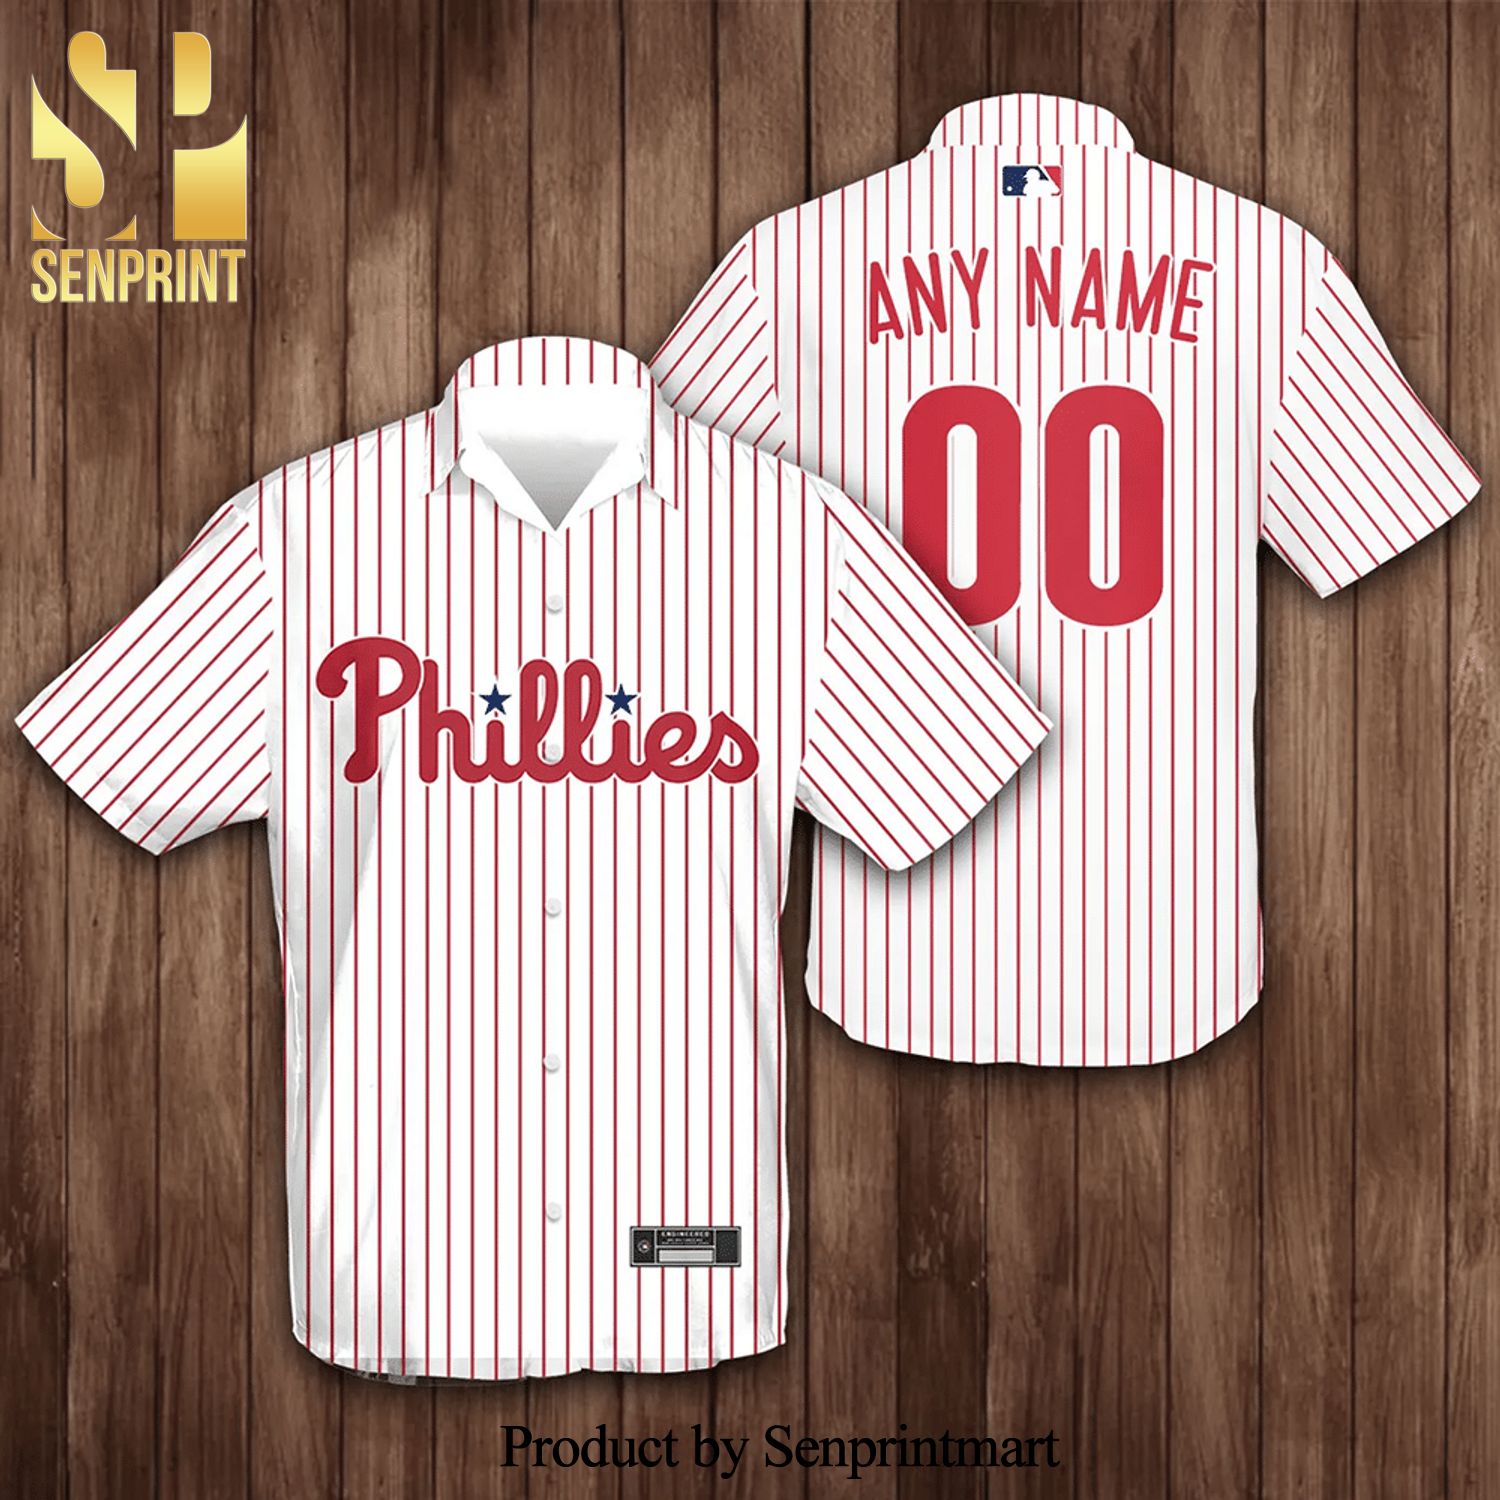 Philadelphia Phillies Personalized Jerseys Customized Shirts with